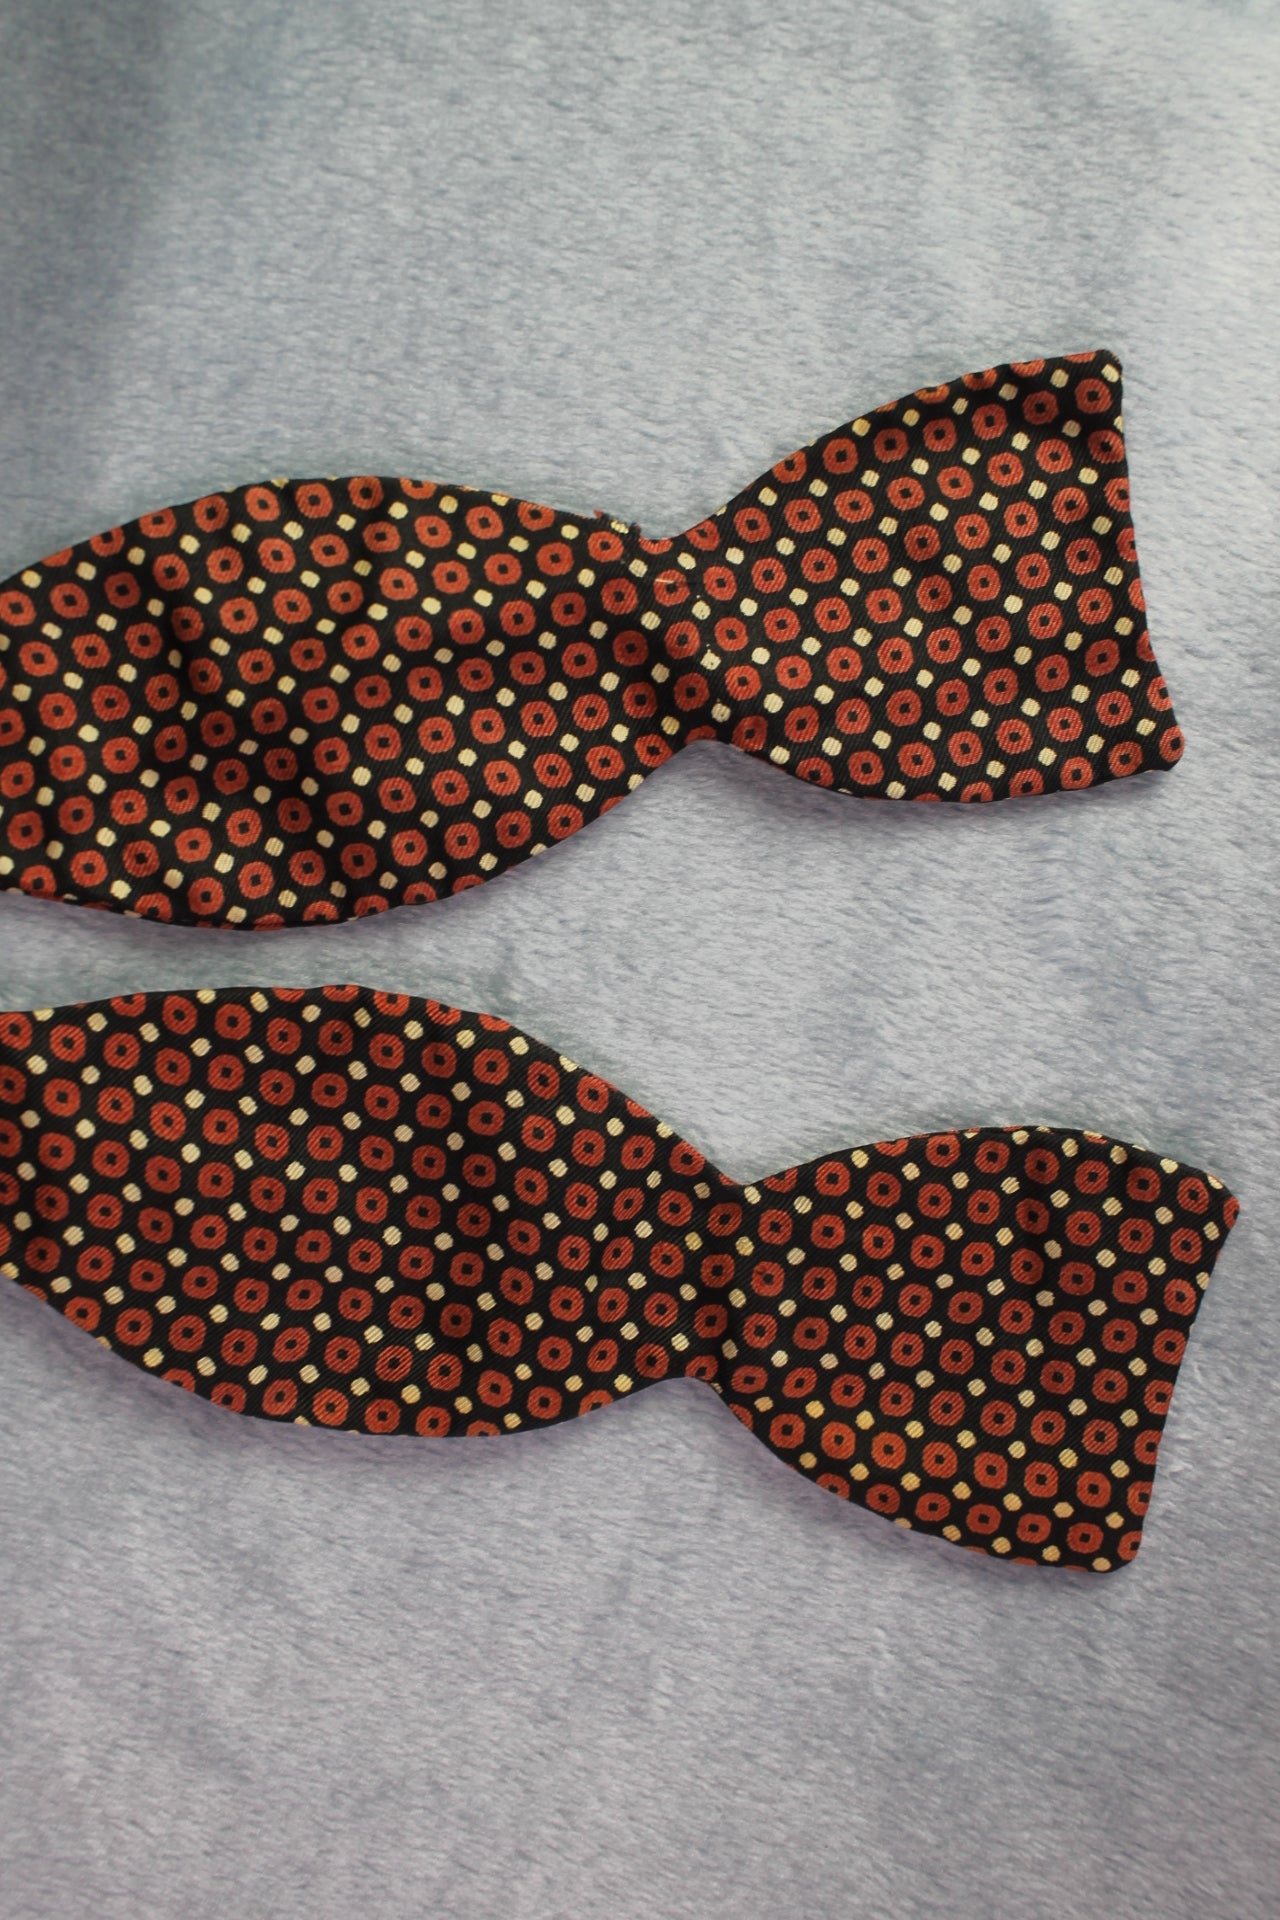 Vintage Countess Wara self tie thistle end orange brown white circle pattern bow tie adjustable